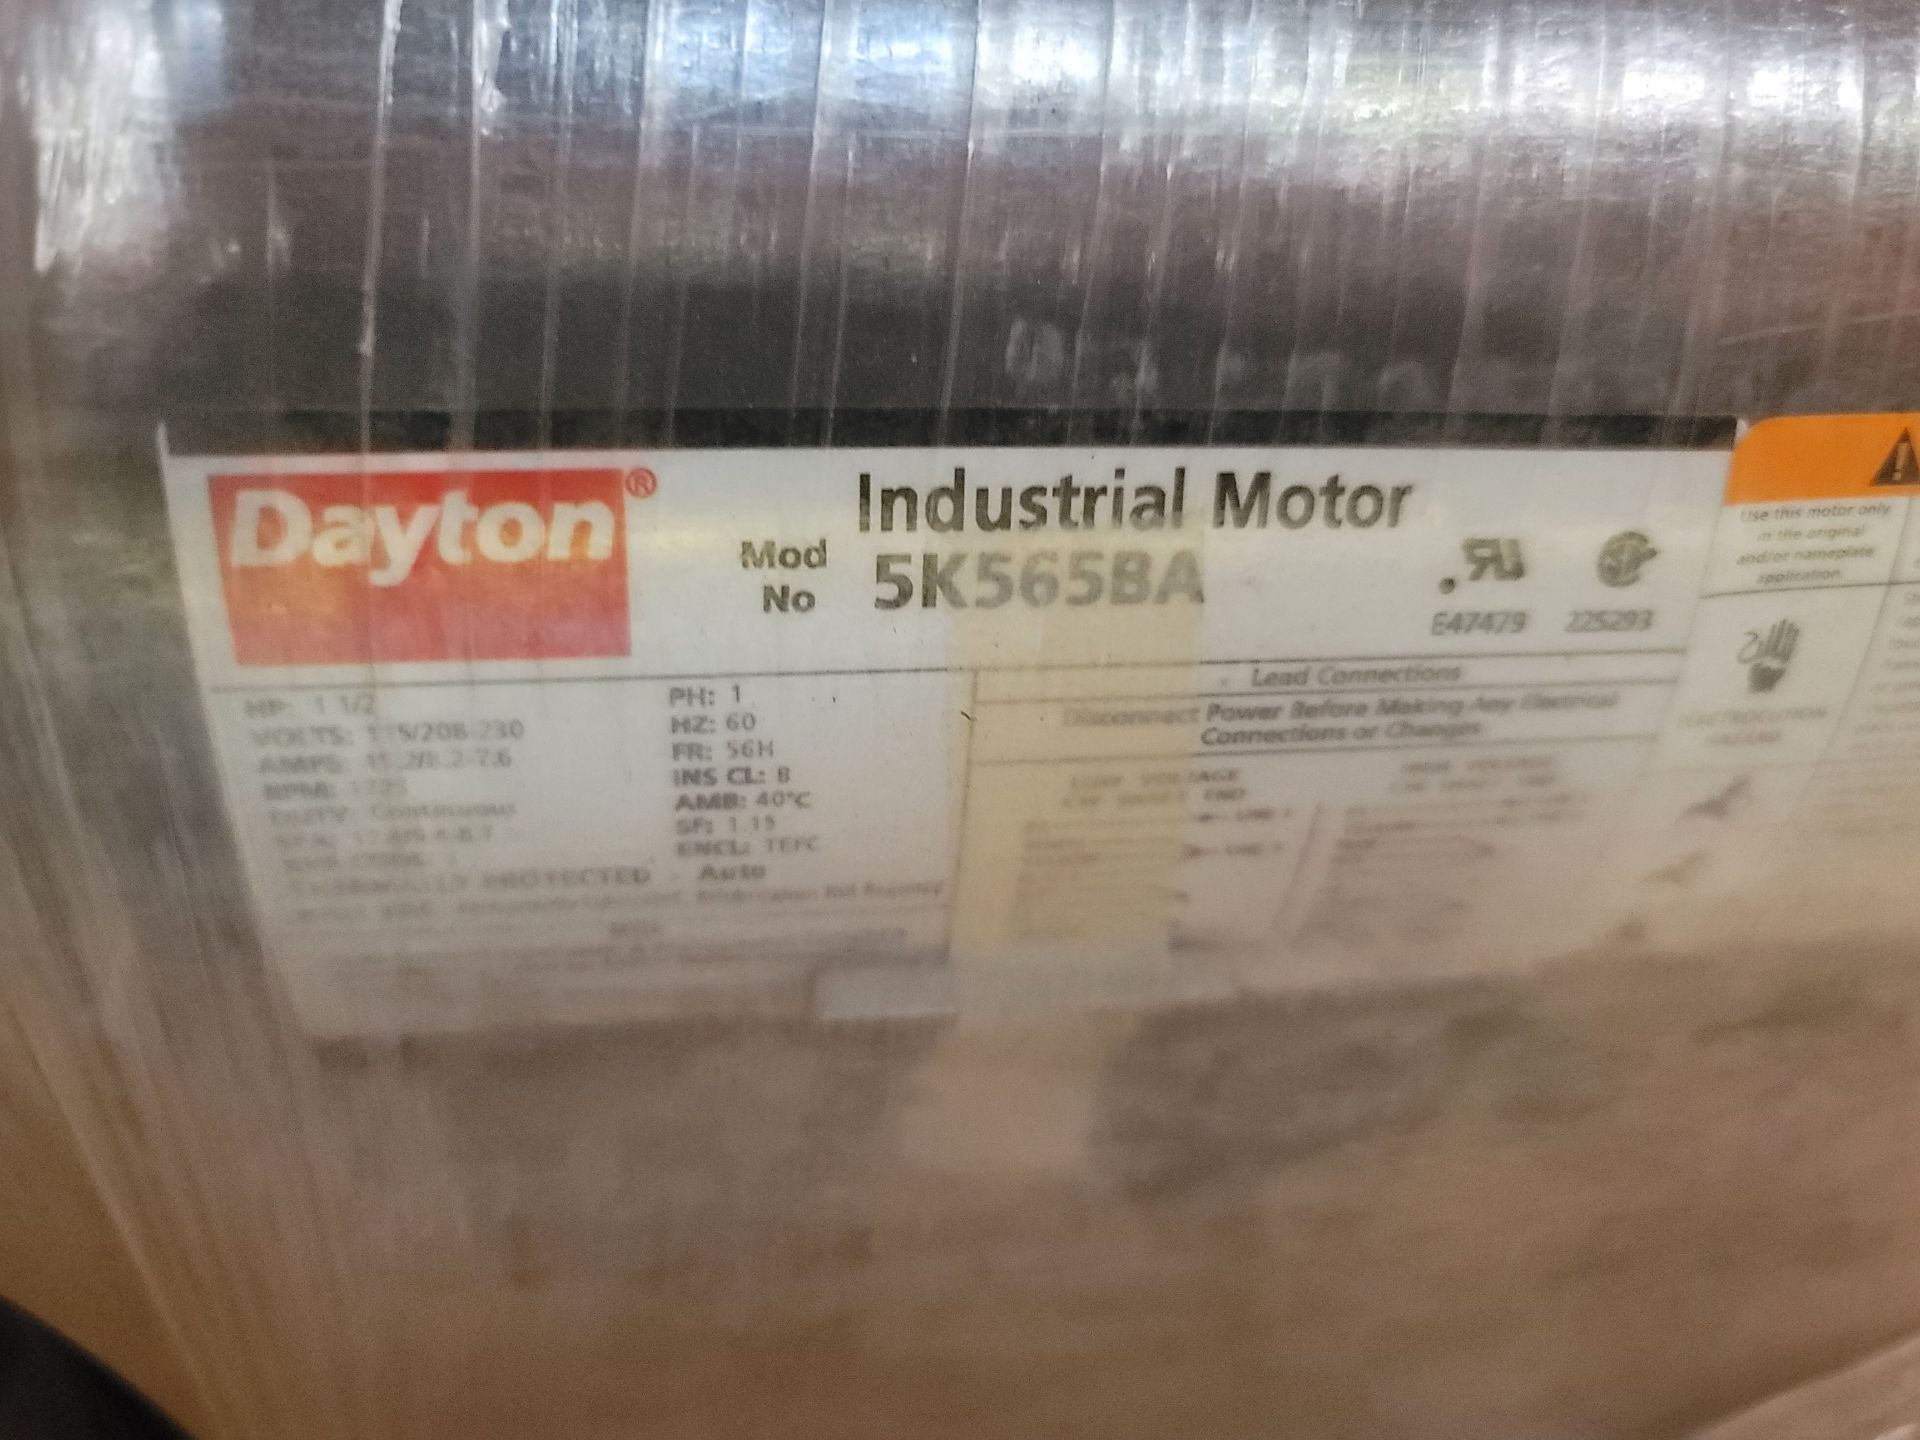 DAYTON 5K565BA INDUSTRIAL MOTOR, 1-1/2 HP, SINGLE PHASE, 115/208/230V, 1725 RPM, NEW - Image 2 of 2